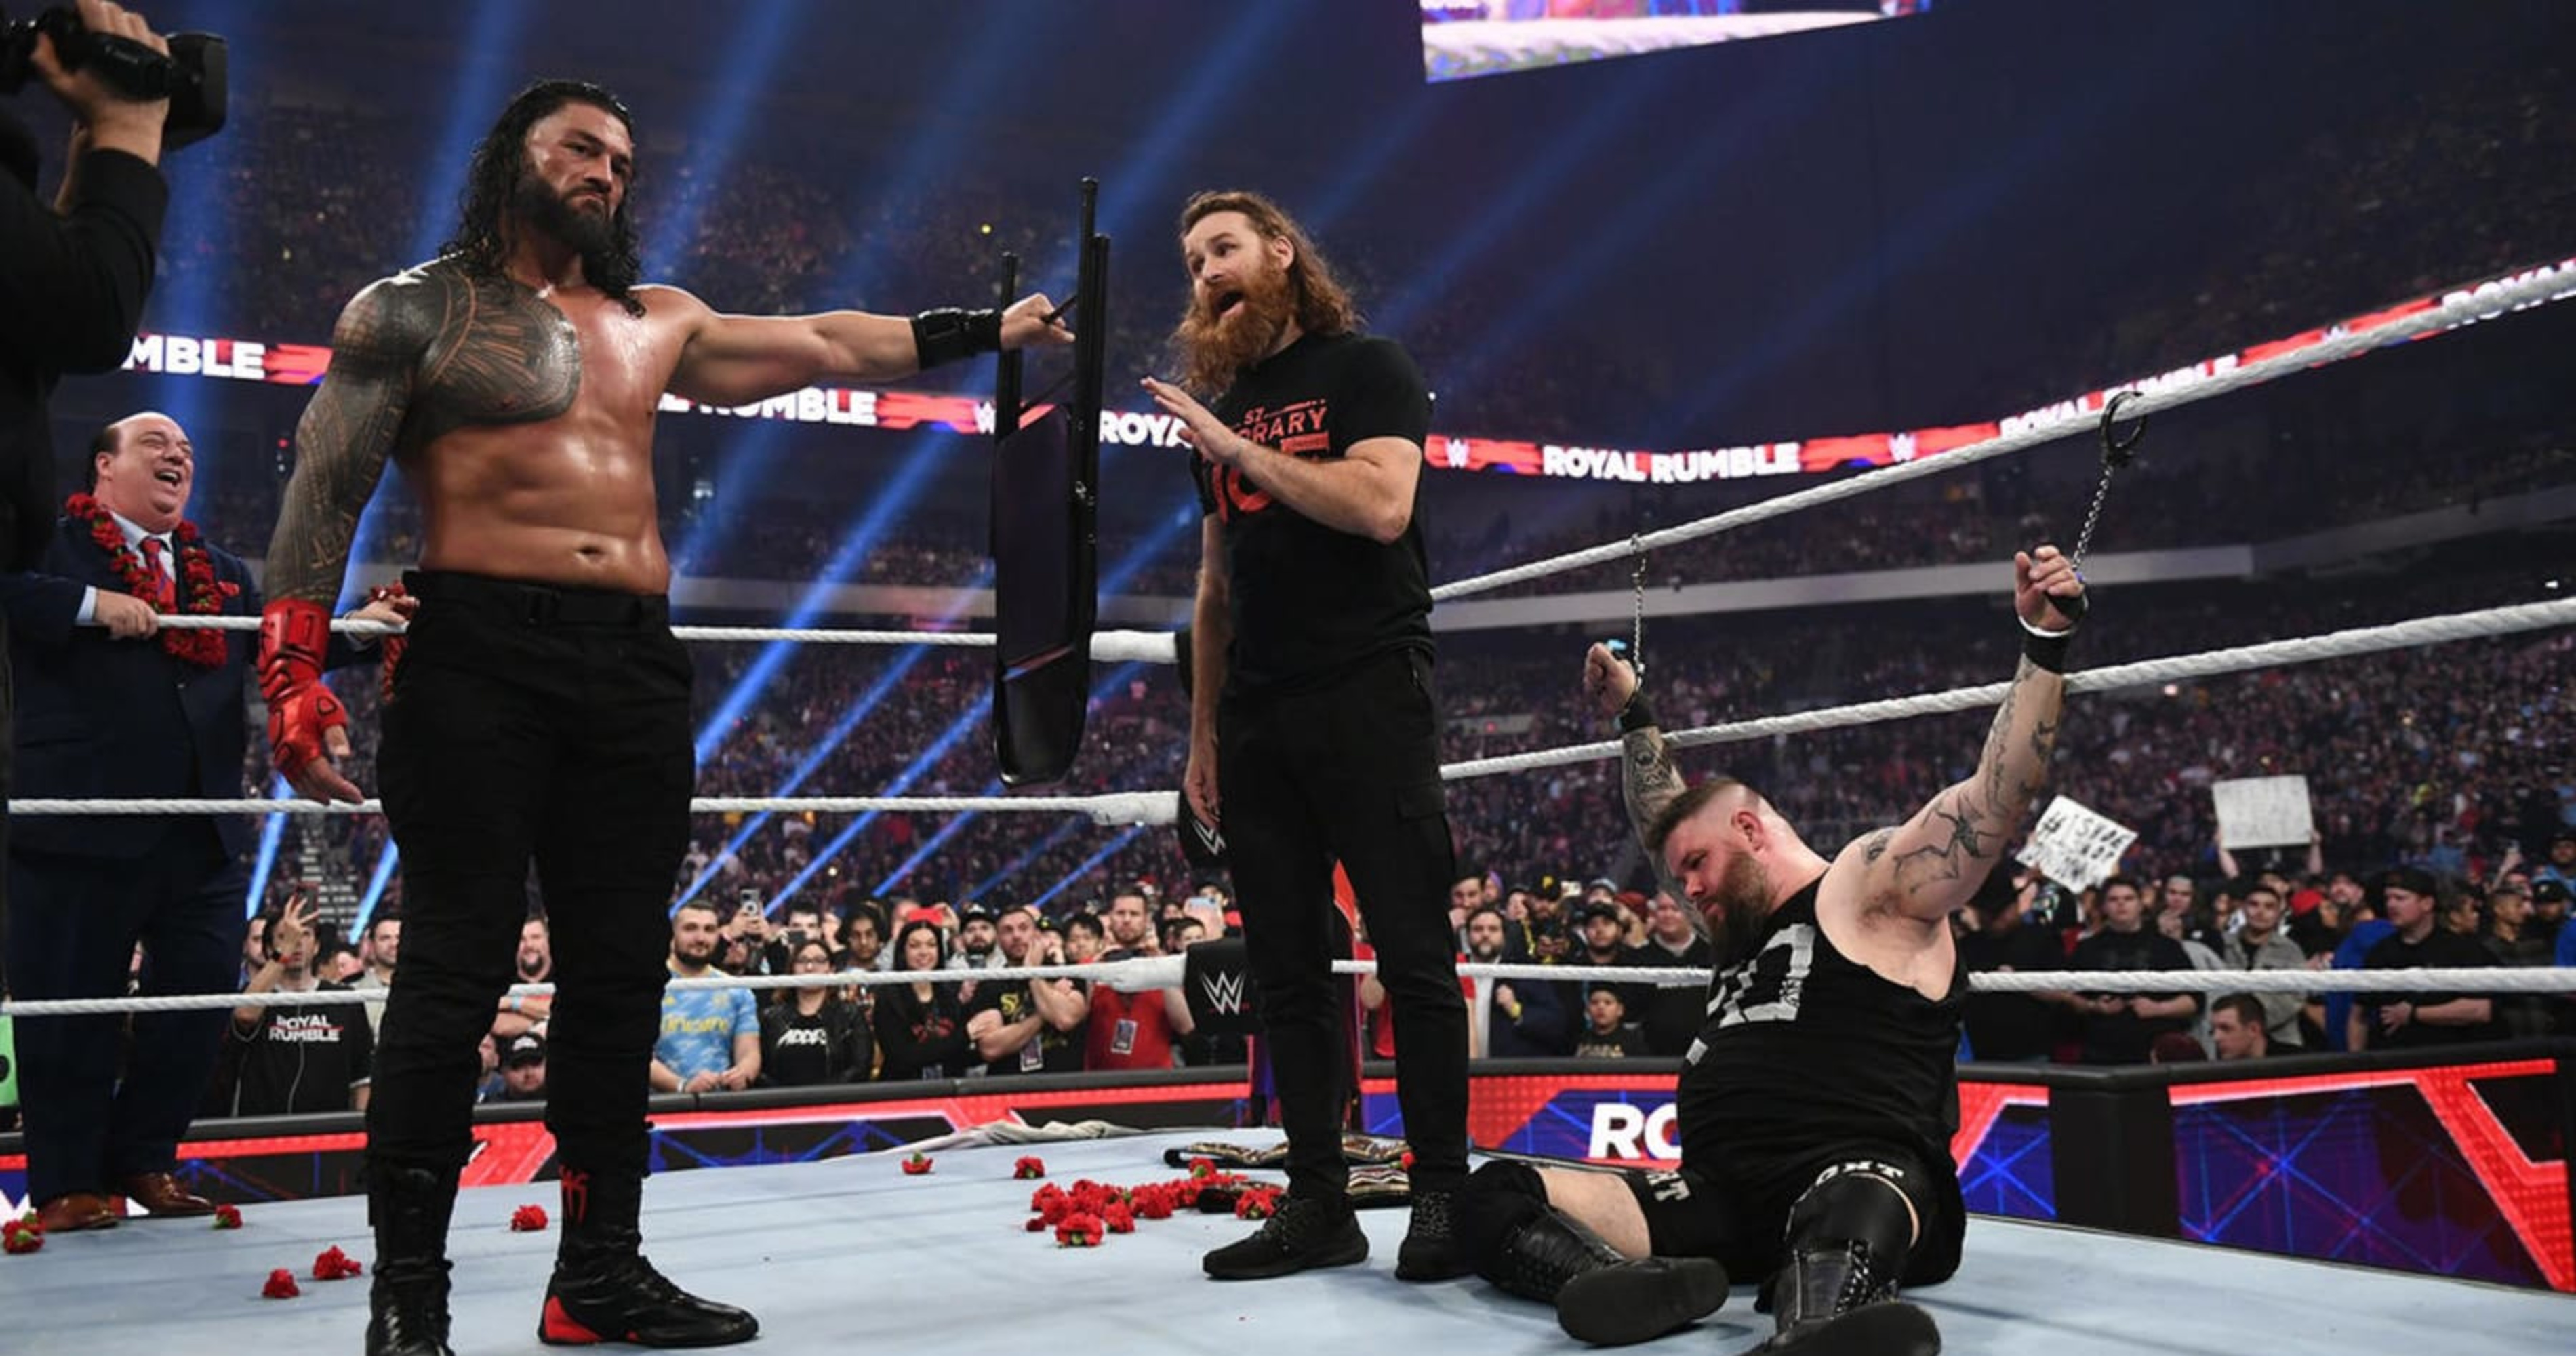 Sami Zayn's Road to WWE WrestleMania, Bray Wyatt Storyline Stalls, More Quick Takes